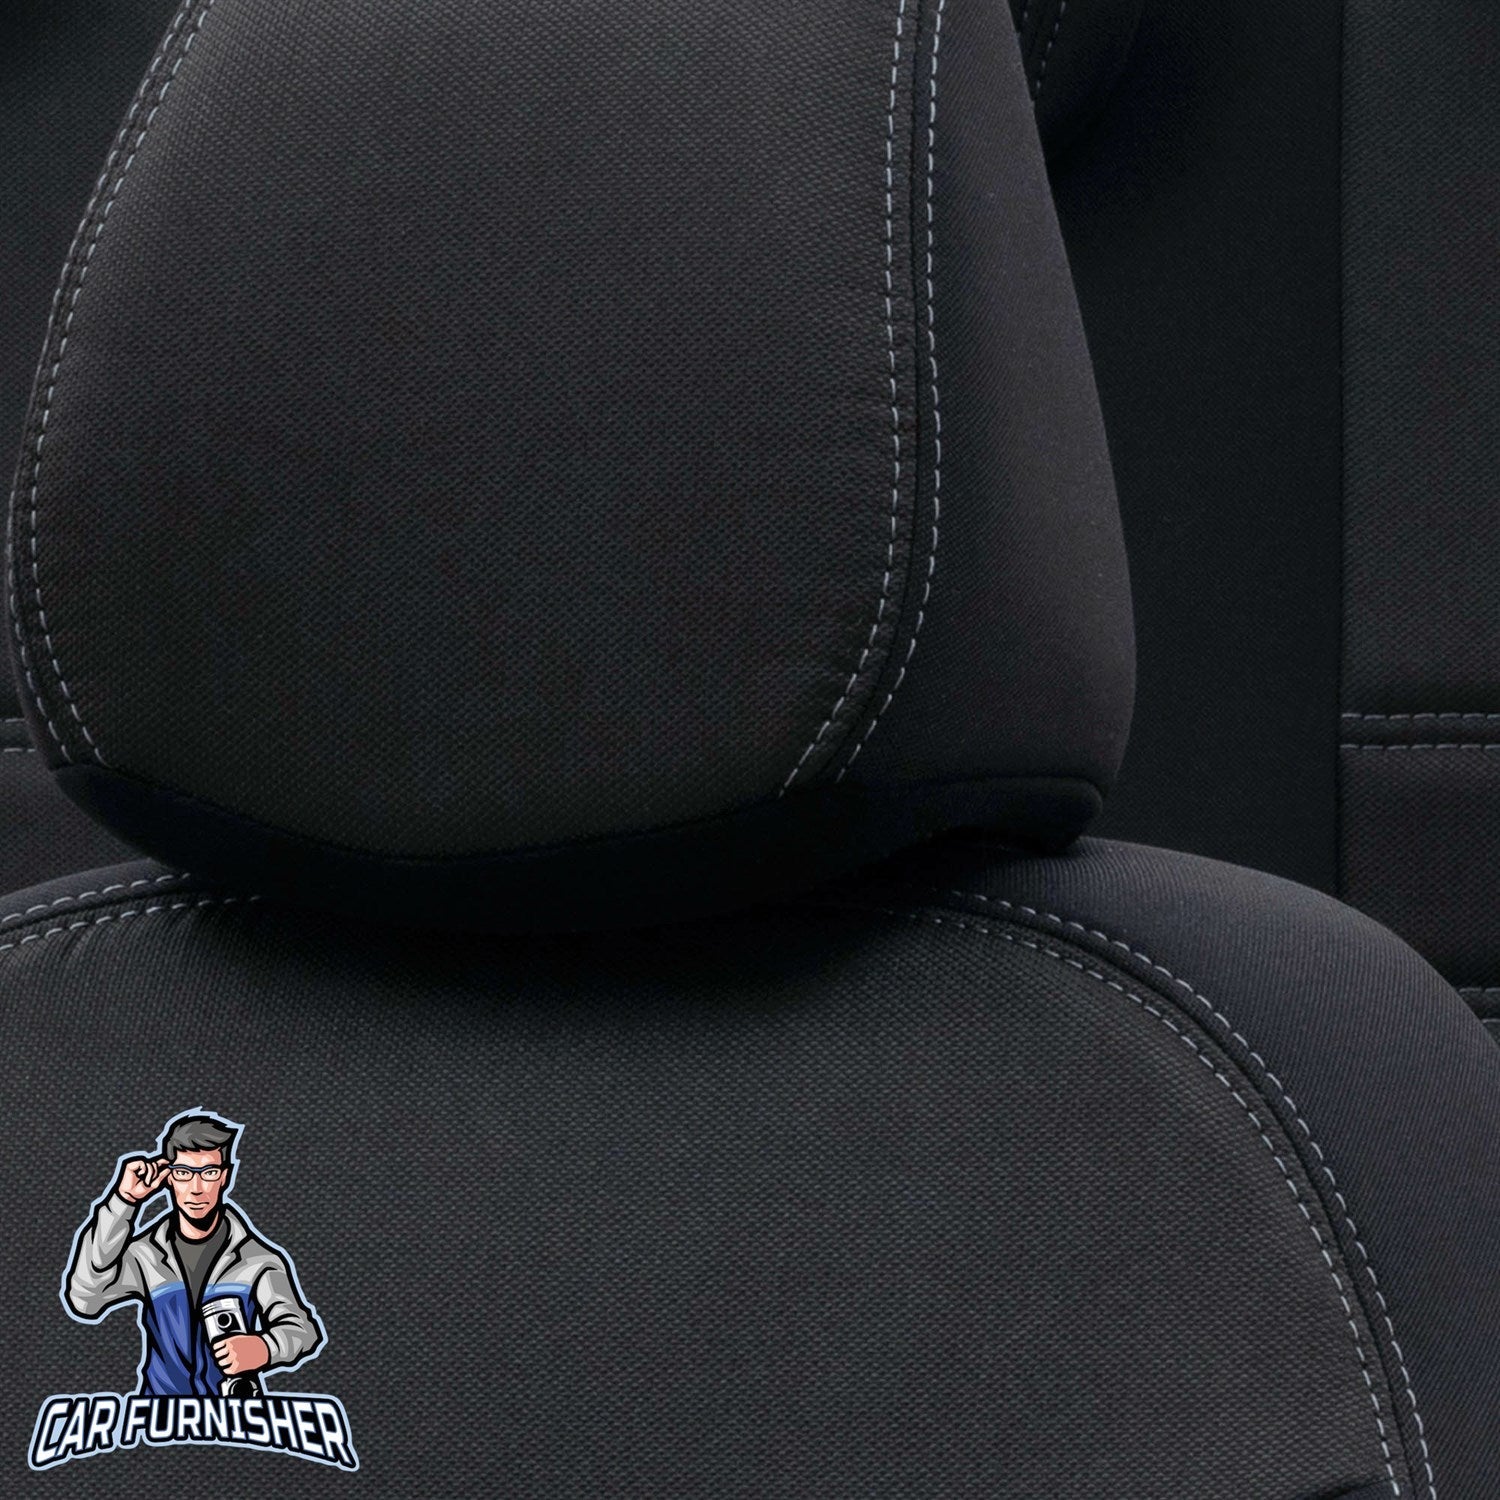 Mazda 6 Seat Covers Original Jacquard Design Black Jacquard Fabric